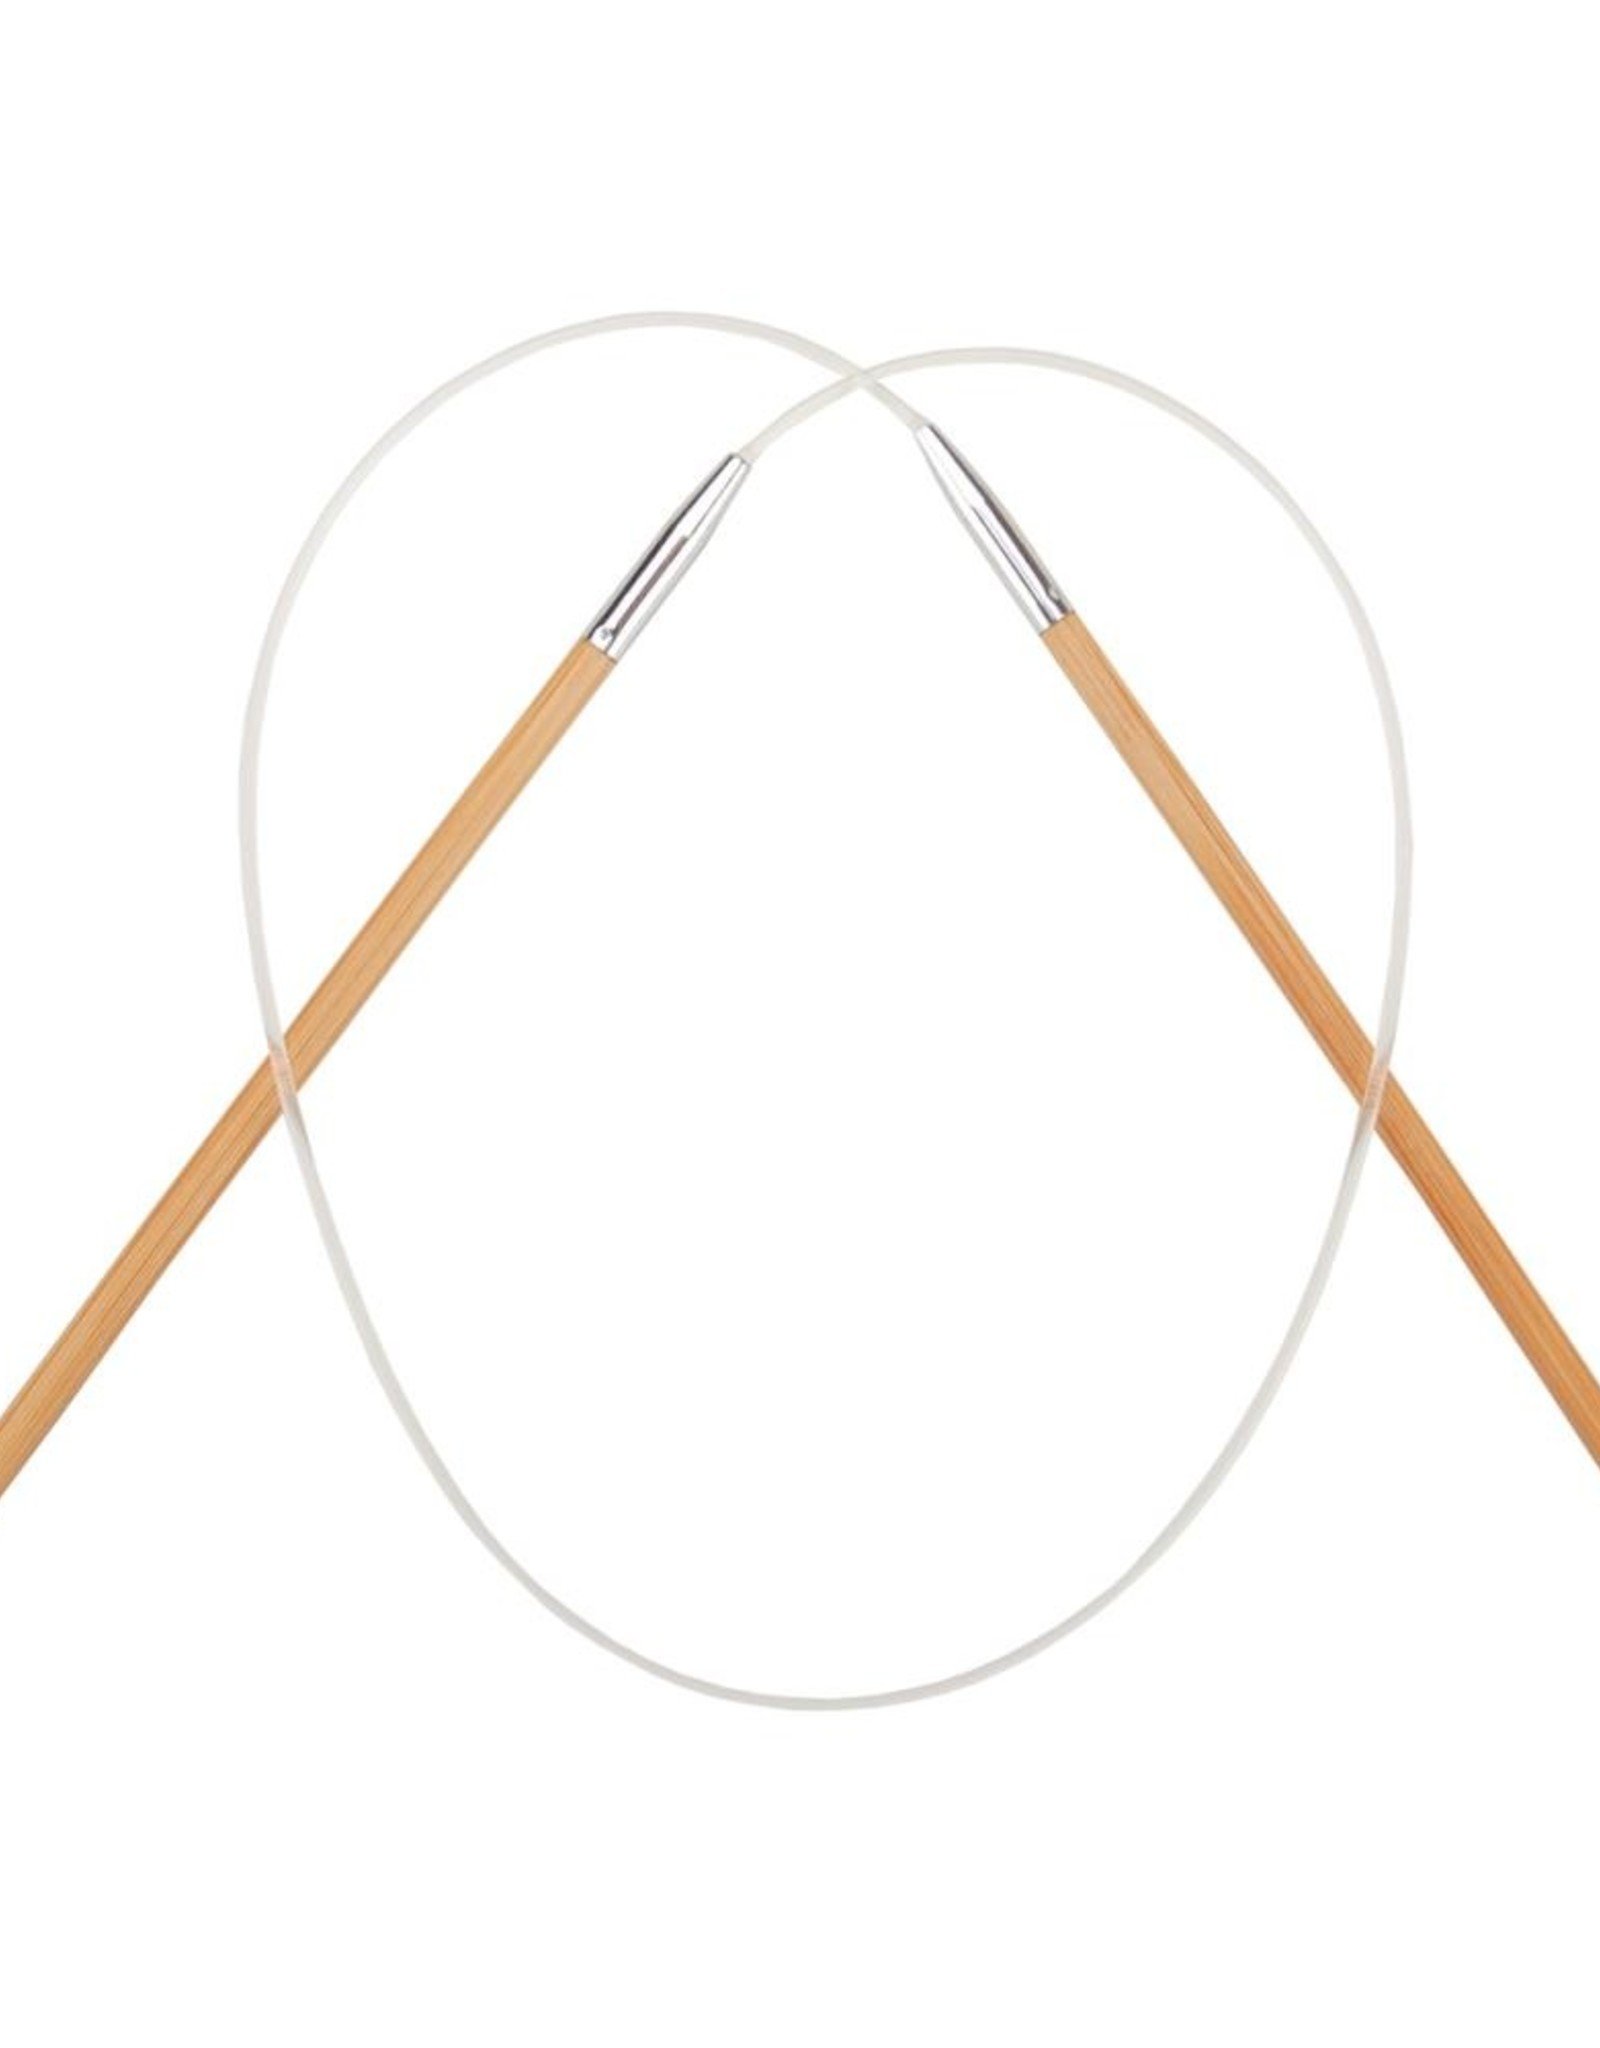 ChiaoGoo Fixed Circular Needles